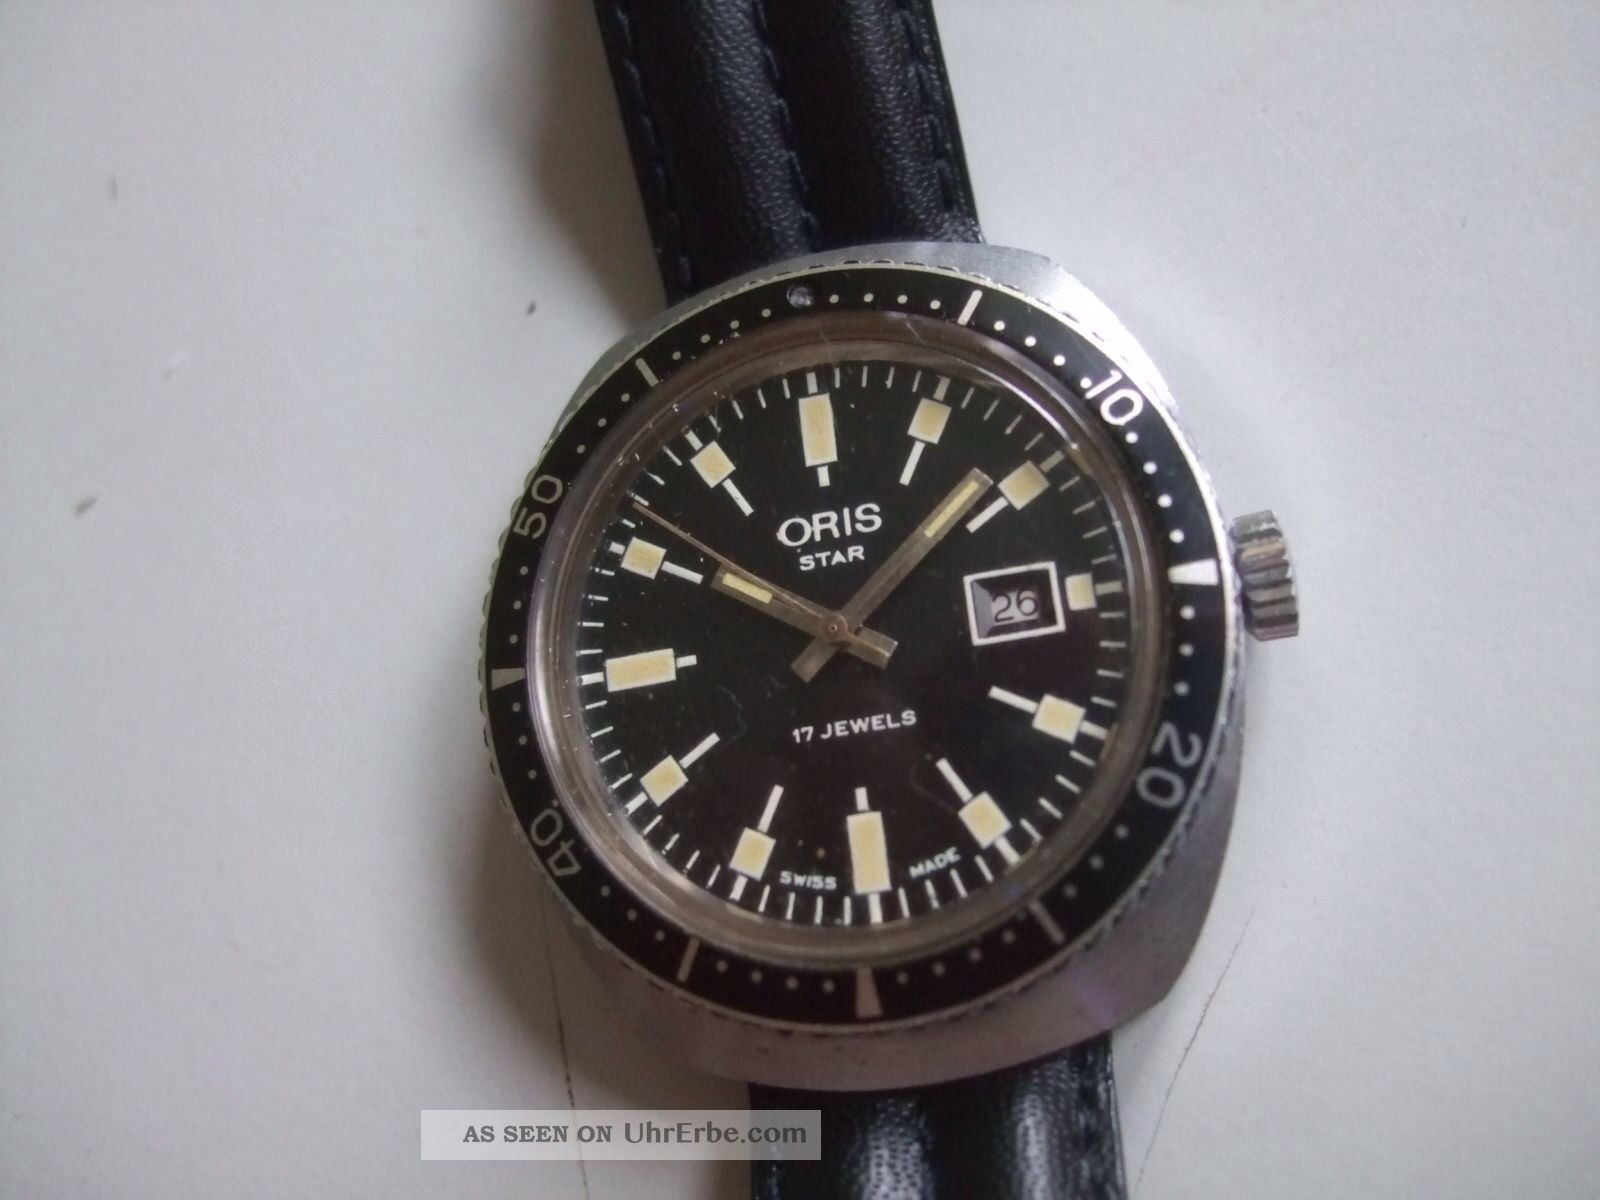 Oris Star Taucher - Uhr Vintage Diver Edelstahl Datum 17 Jewels Swiss Made